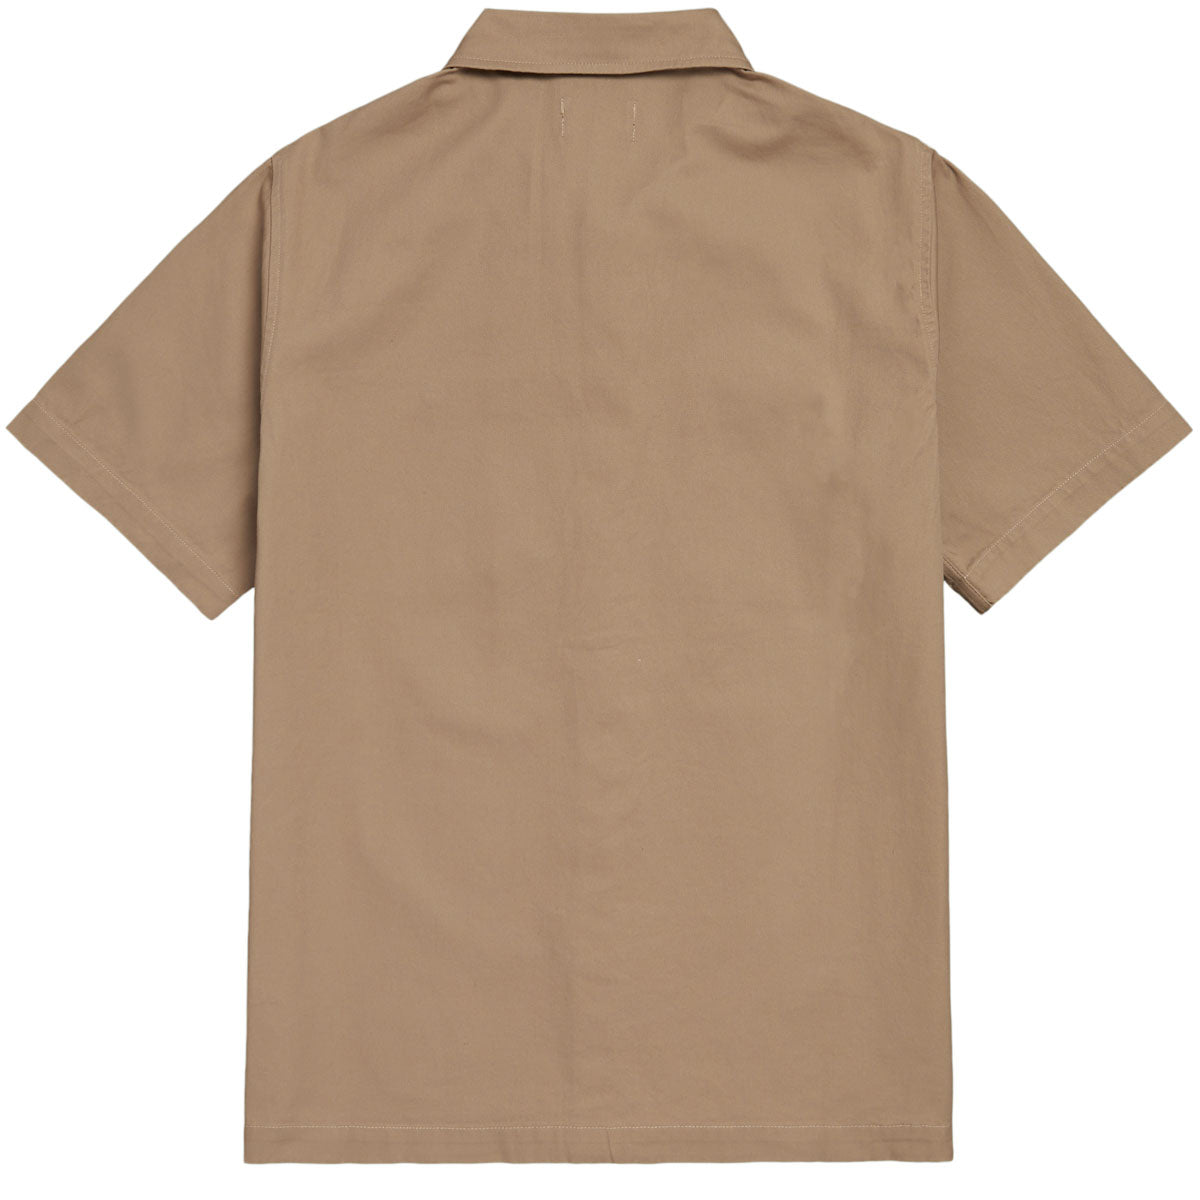 CCS Heavy Cotton Work Shirt - Khaki image 4